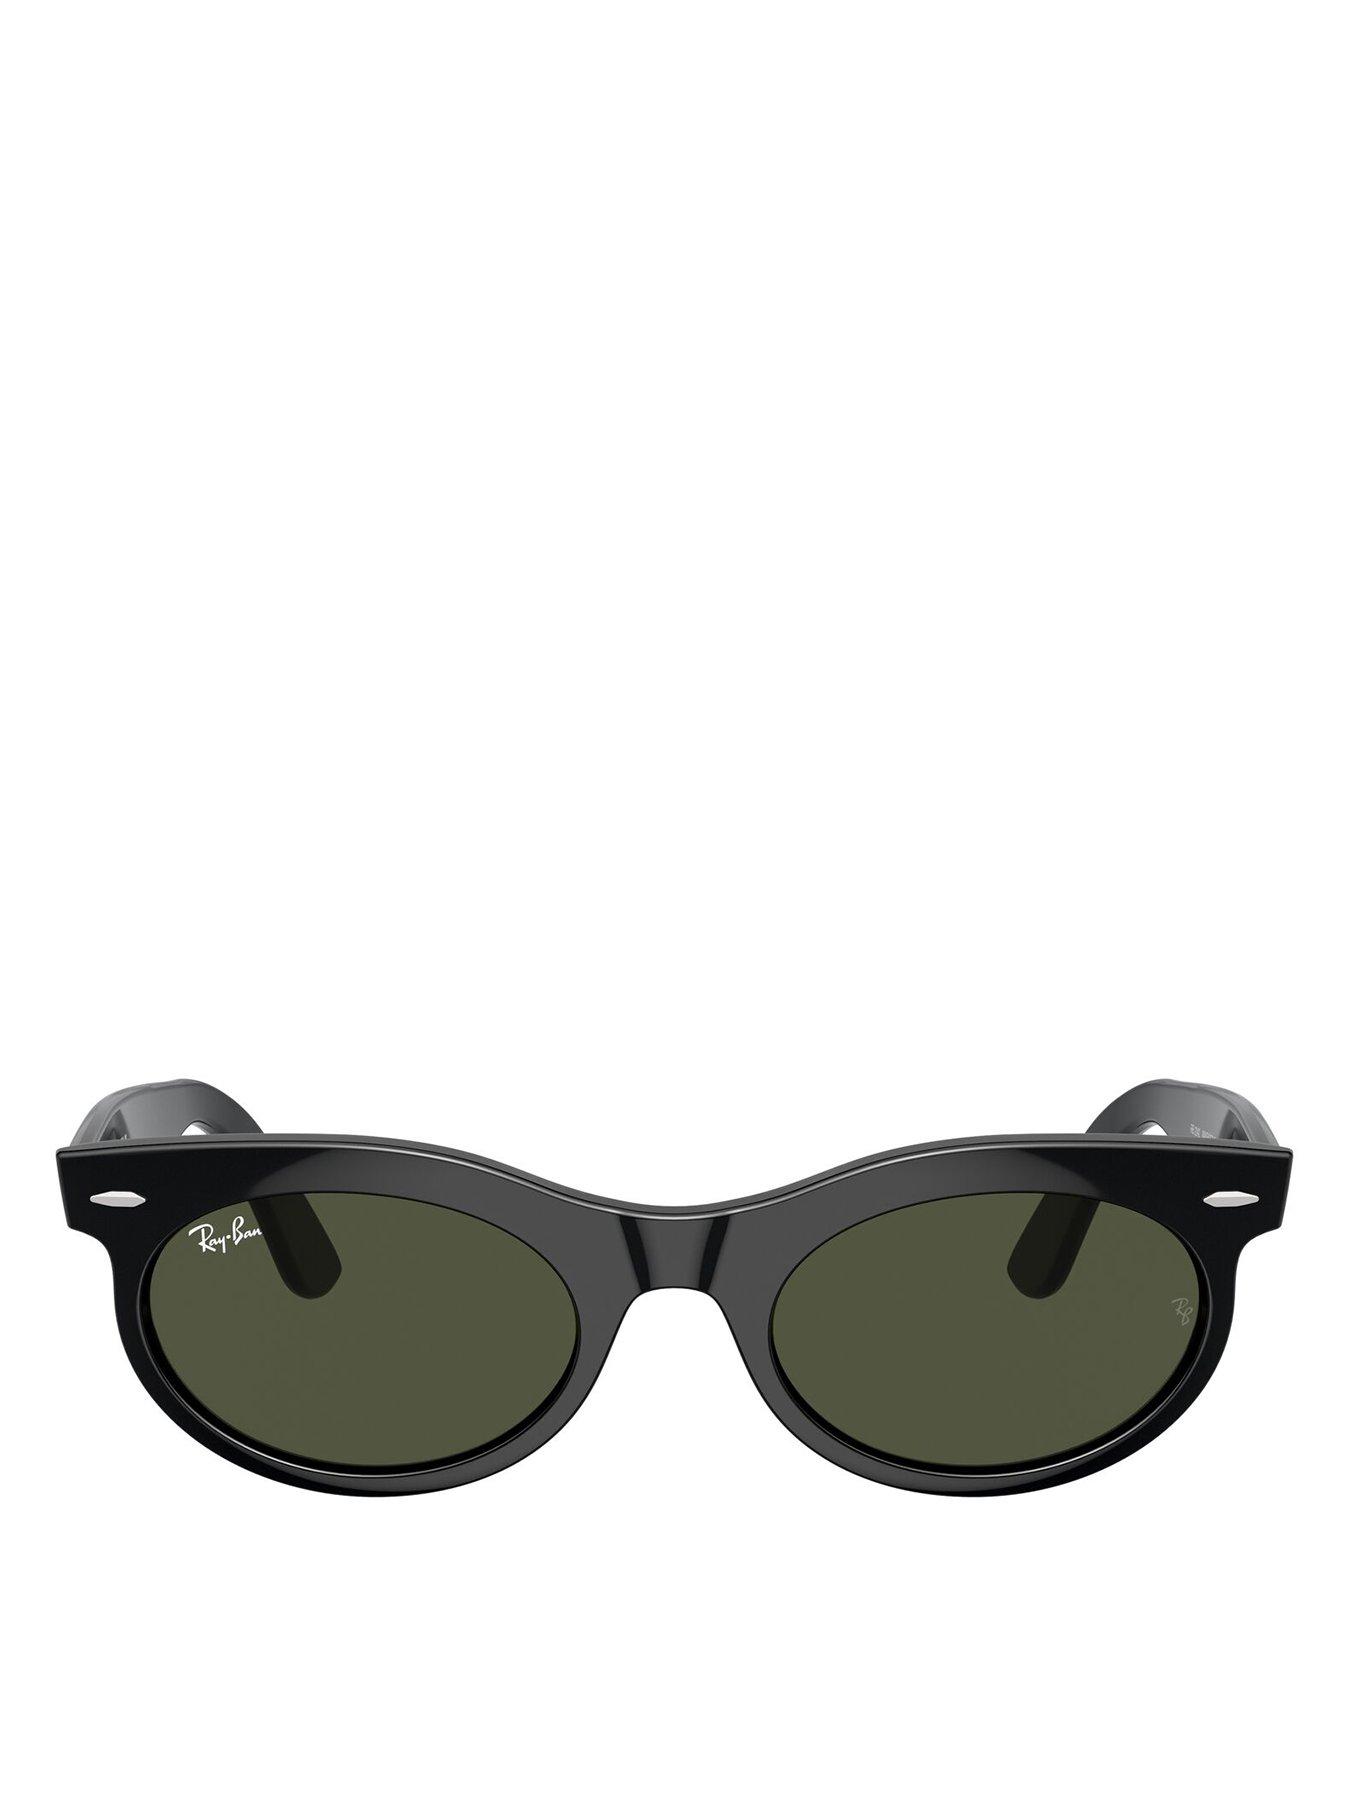 Ray-Ban Wayfarer Oval Sunglasses | Very.co.uk